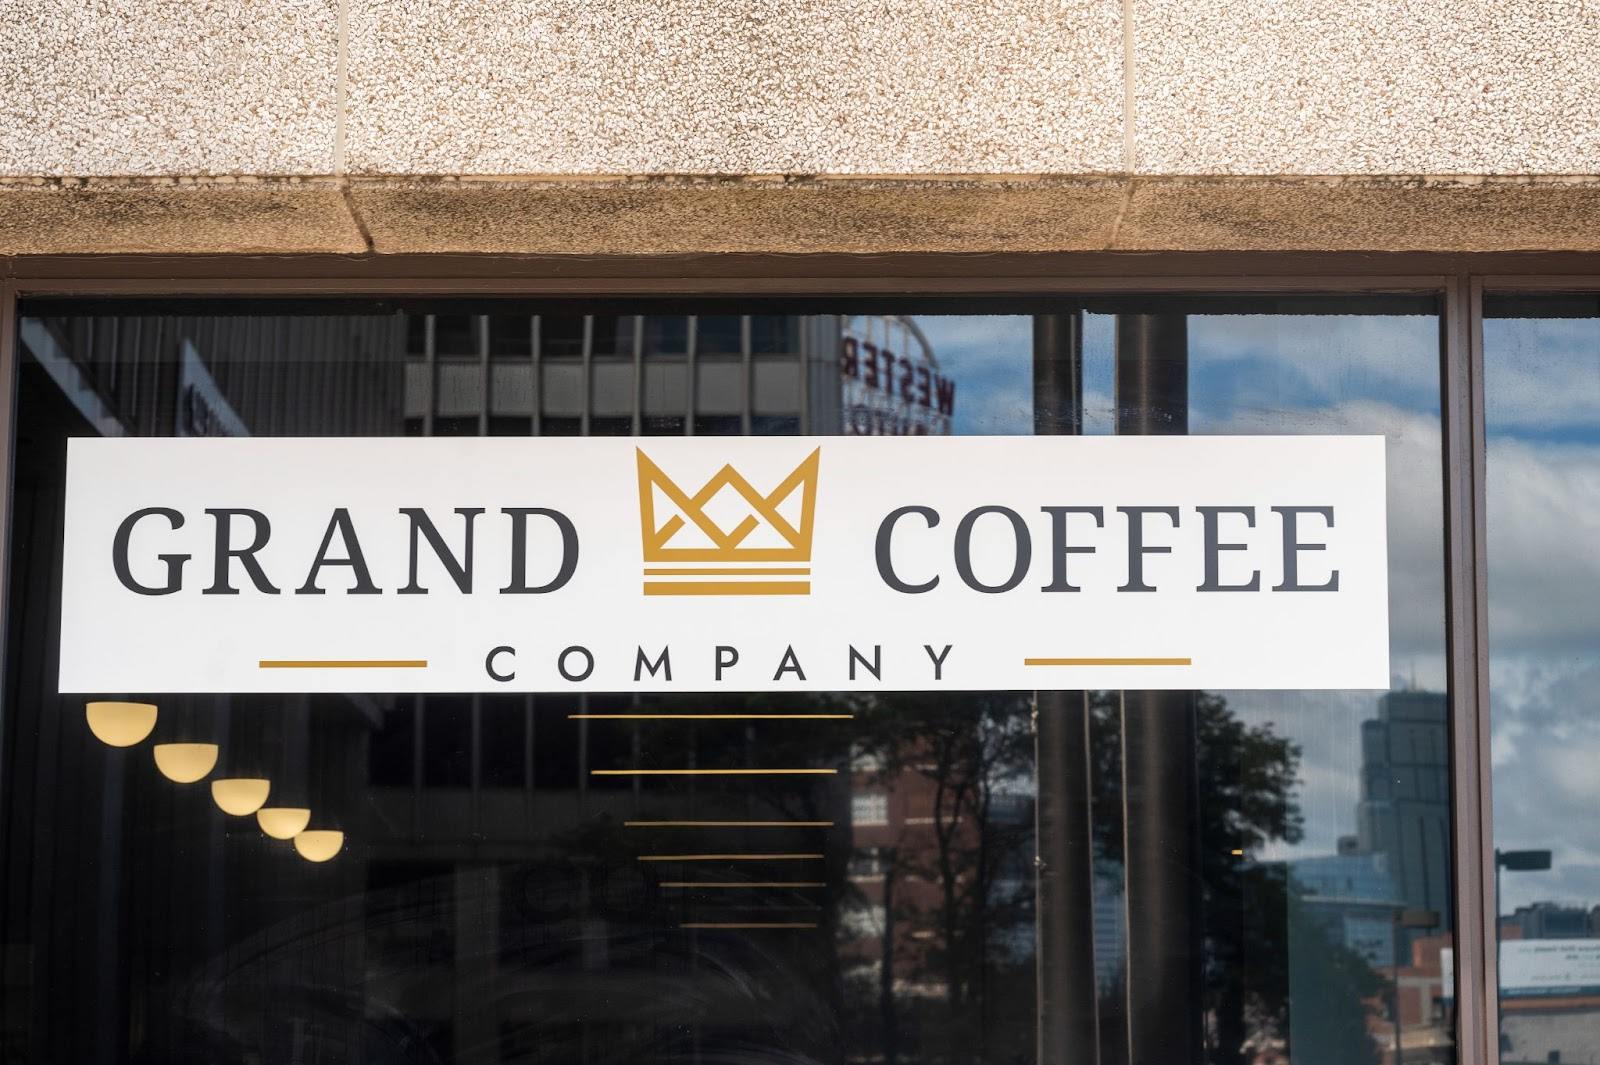 Grand coffee logo on the glass